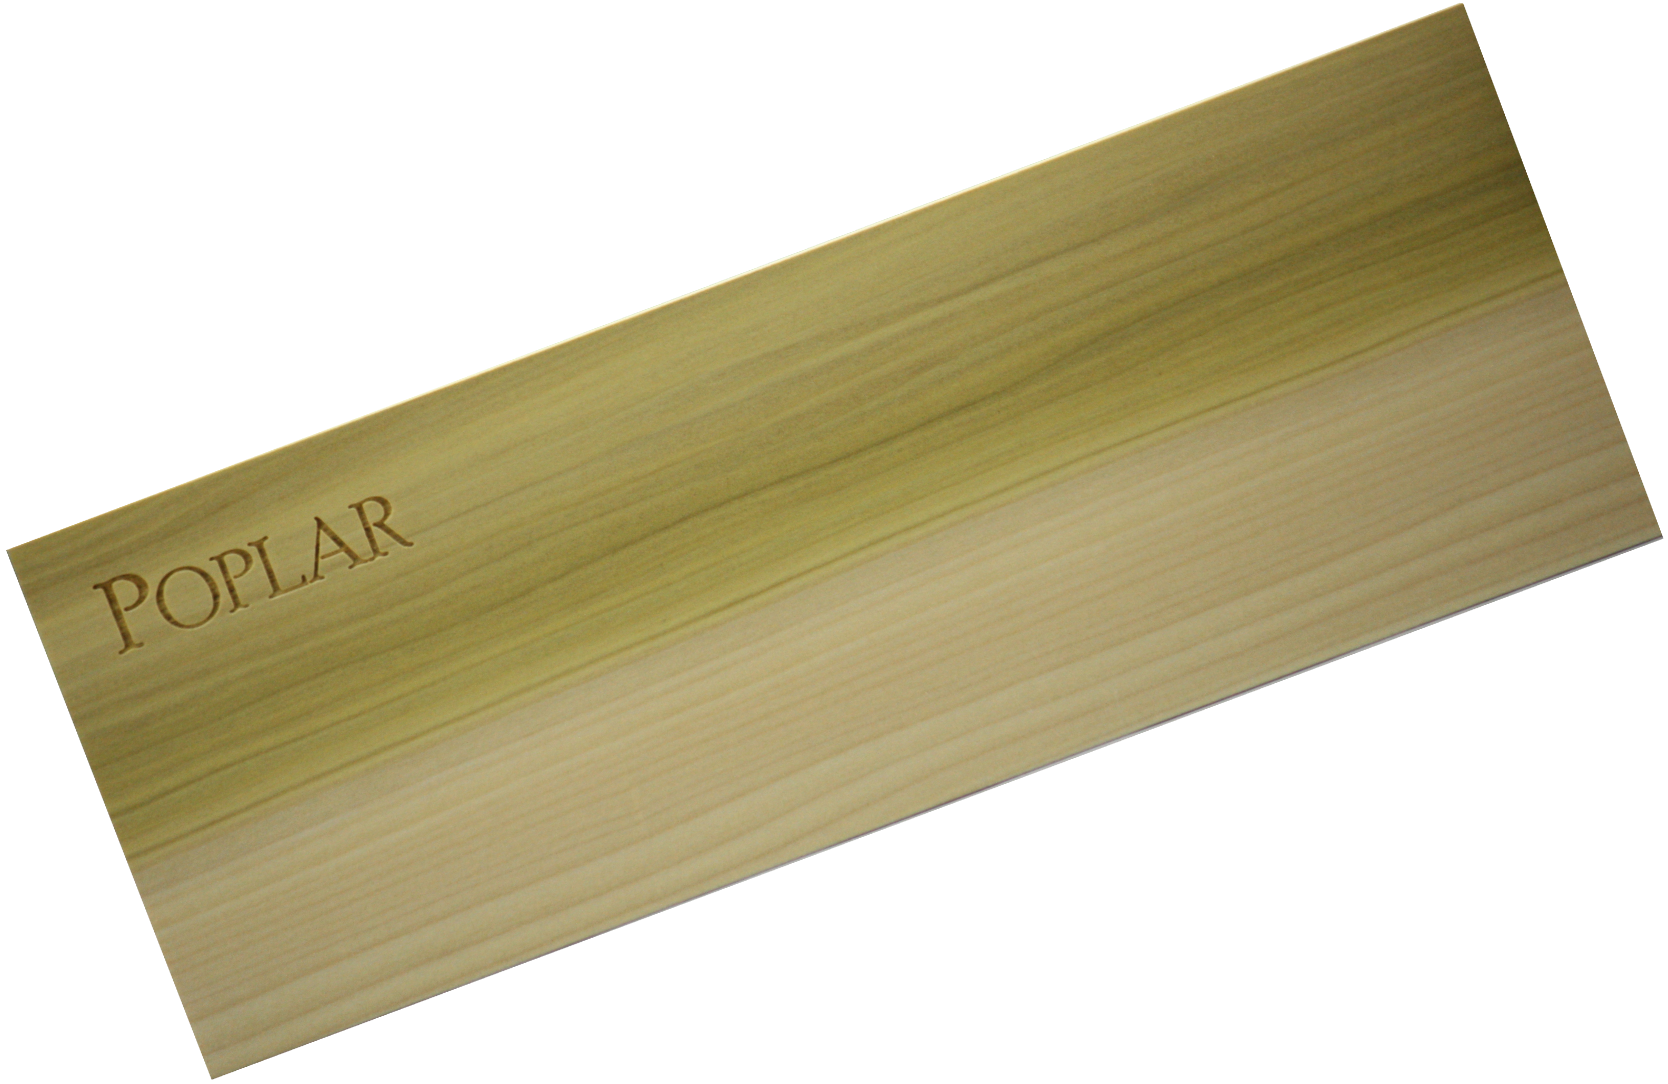 Wood Strip (Poplar) 4.5" x 24" x  (1/16", 3/32", 1/8", 3/16" or 1/4") 